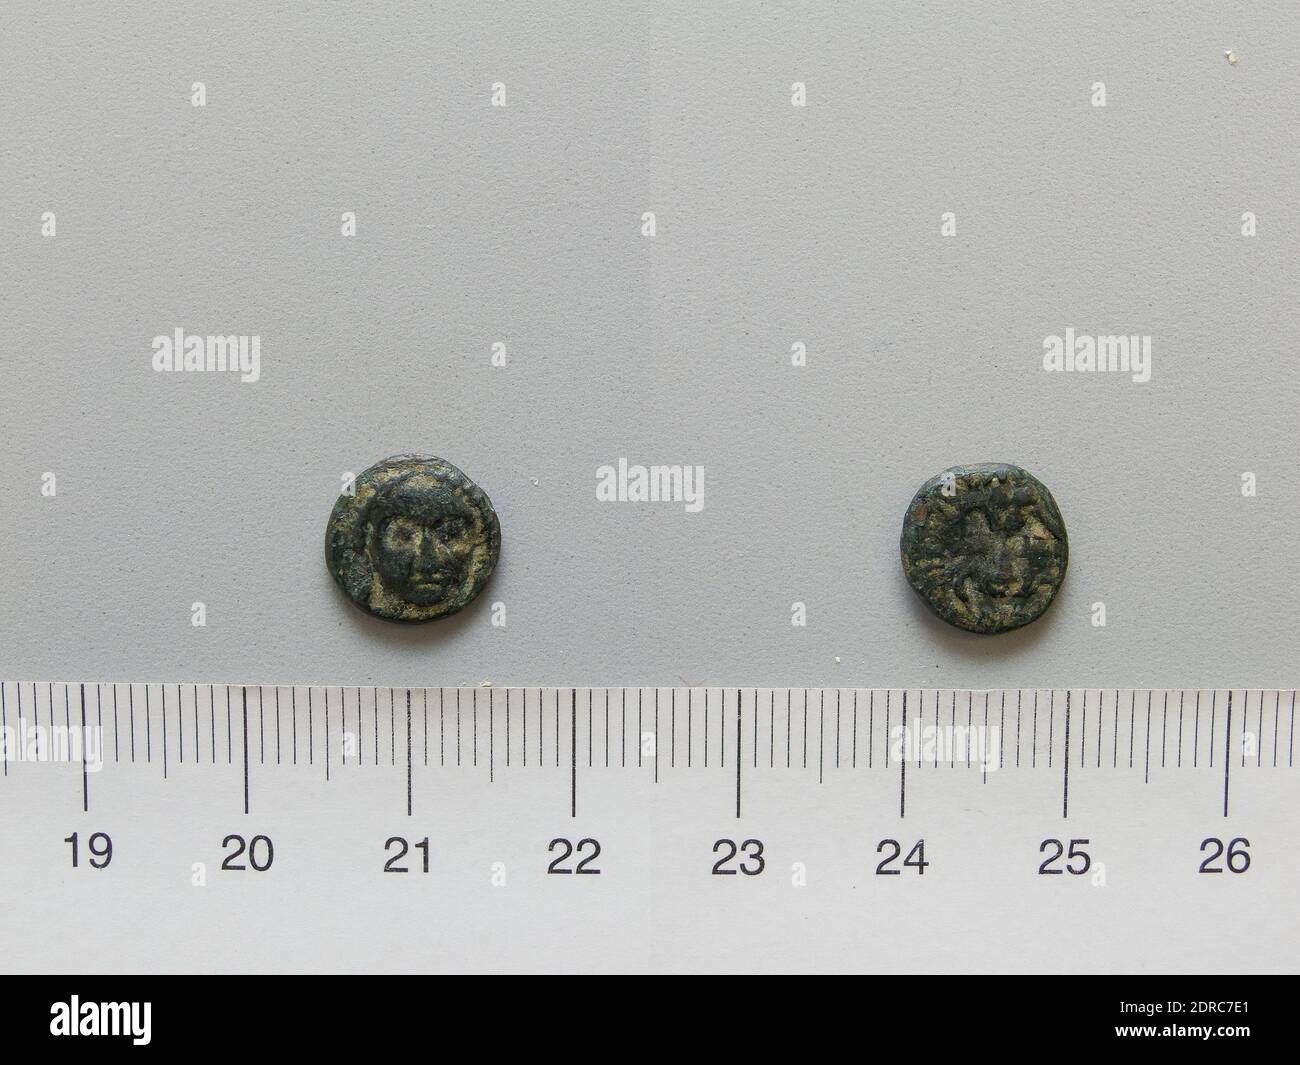 Mint: Samos, Coin from Samos, 394–365 B.C., Copper, 0.98 g, 12:00, 10.5 mm, Made in Samos, Ionia, Greek, 4th century B.C., Numismatics, Numismatics Stock Photo